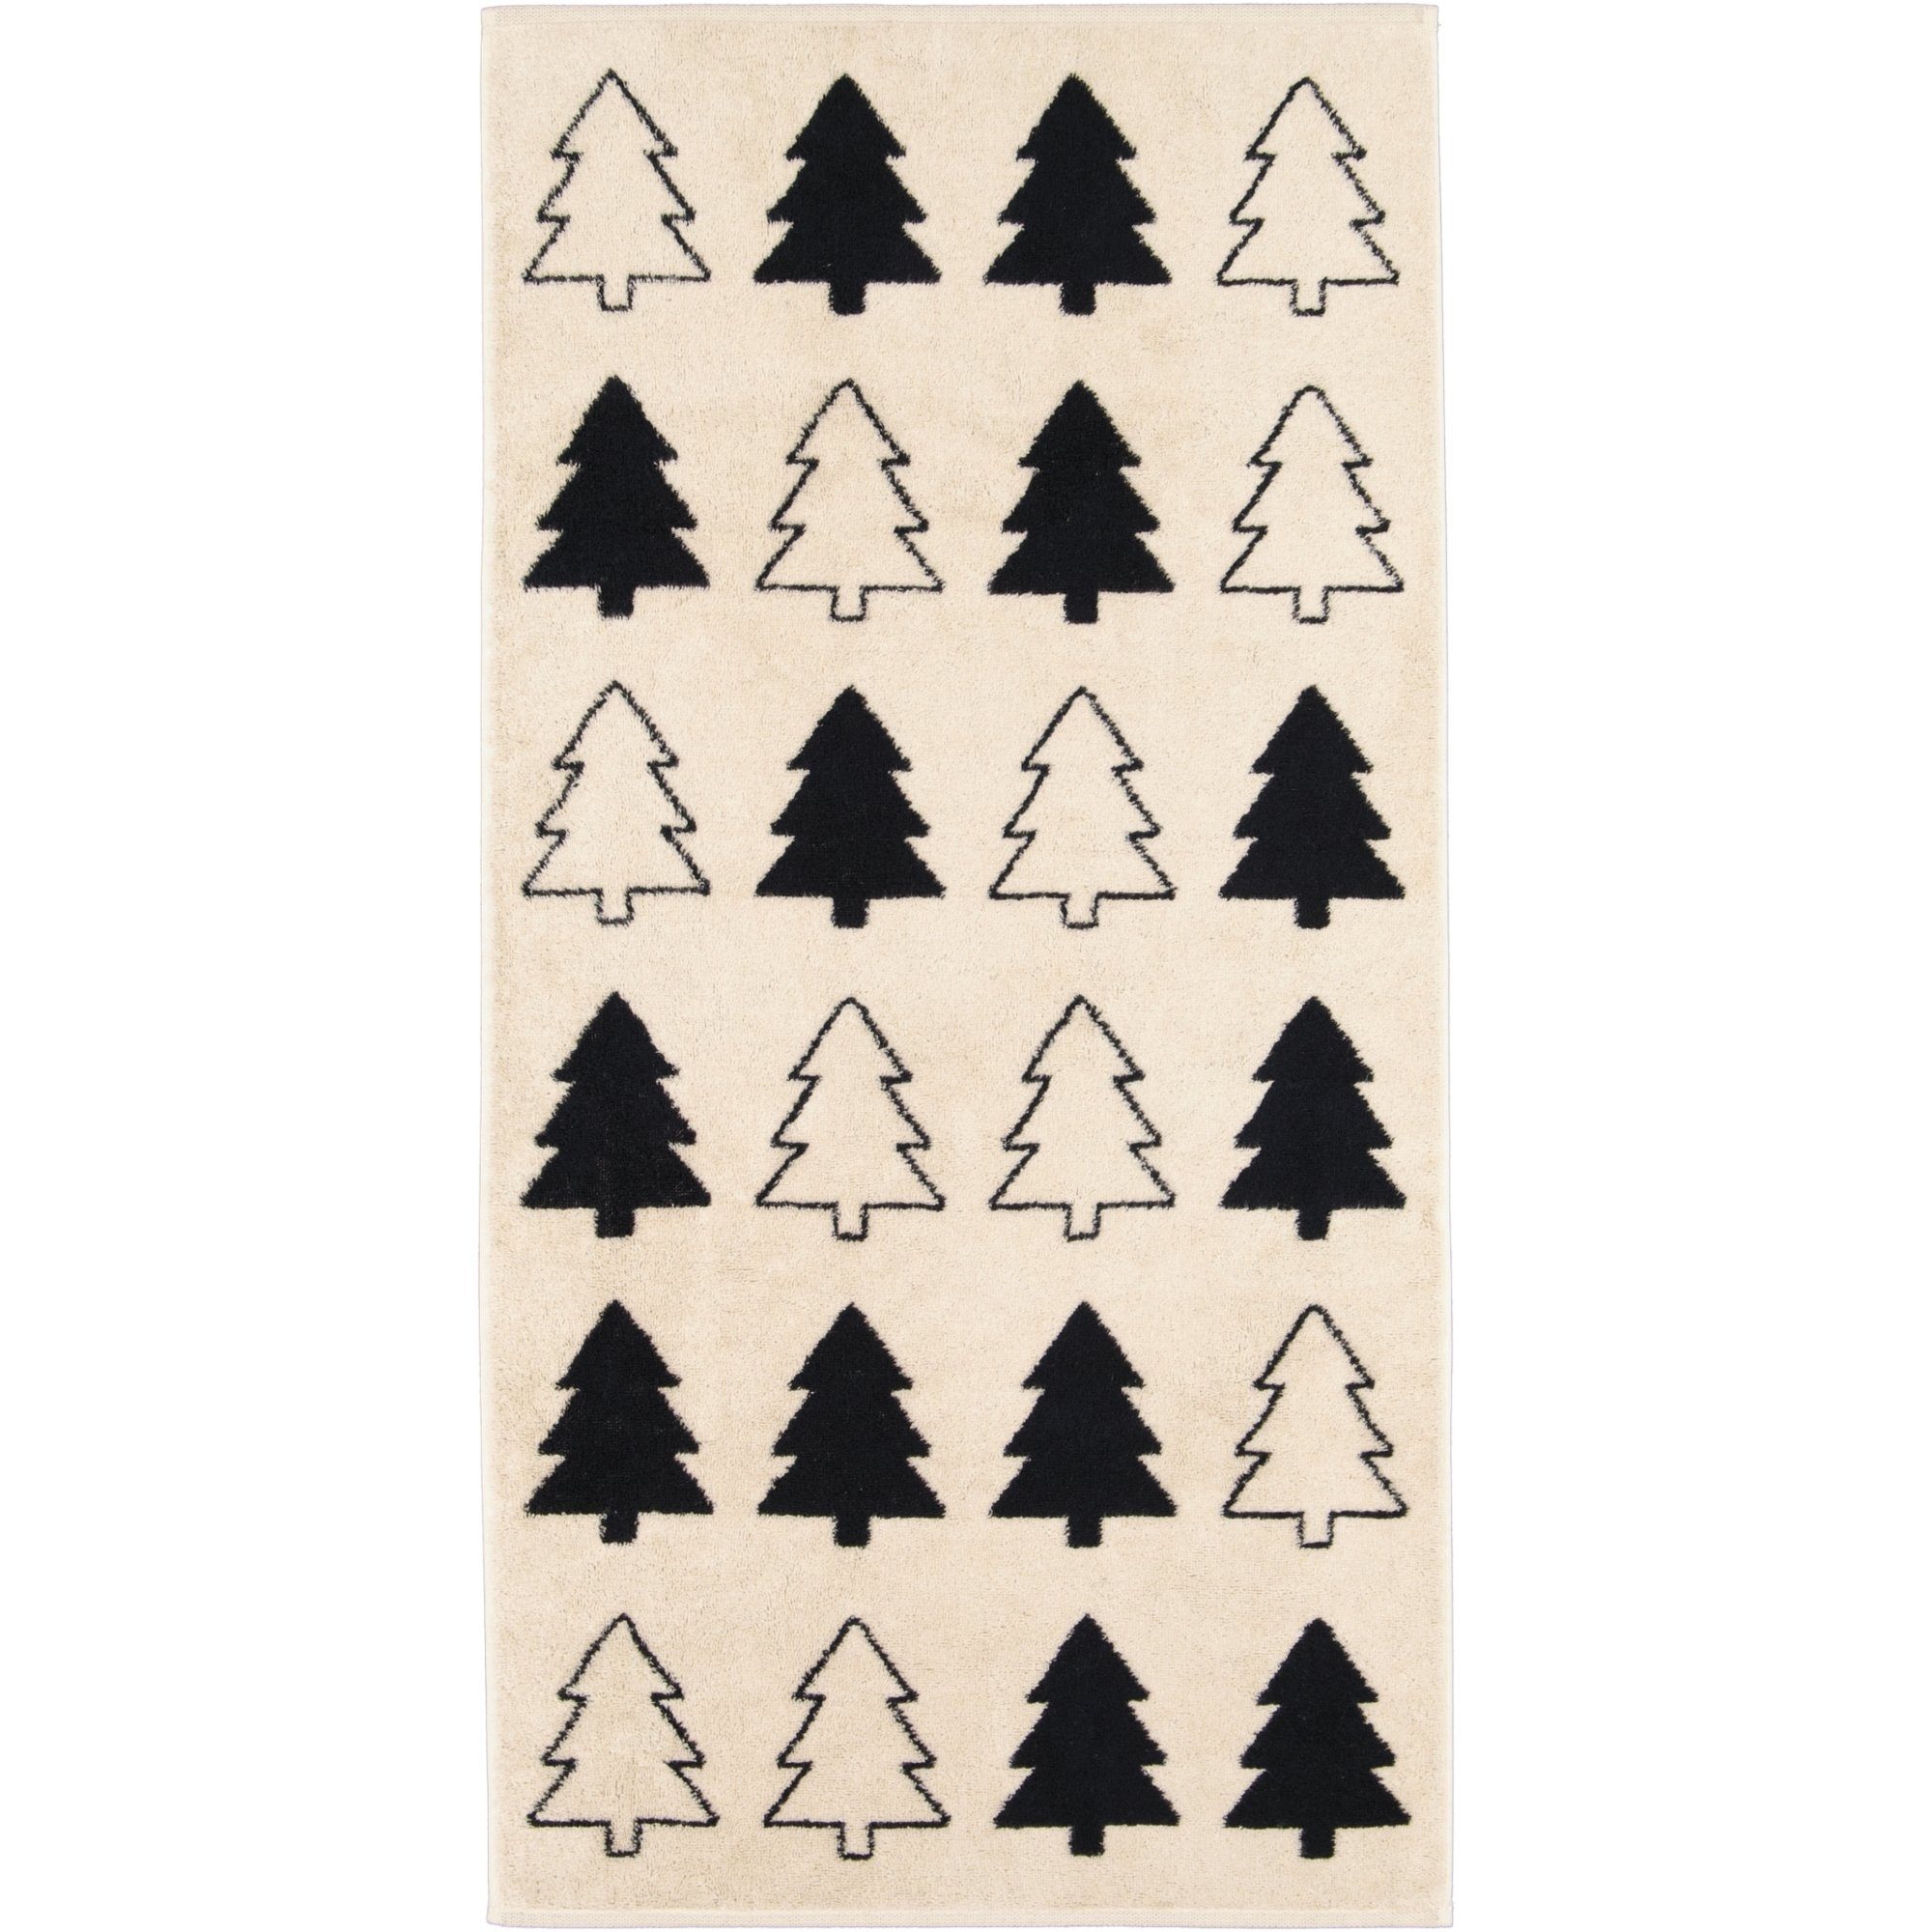 Tannenbäume Handtücher Cawö Christmas 794, 100% Baumwolle Edition